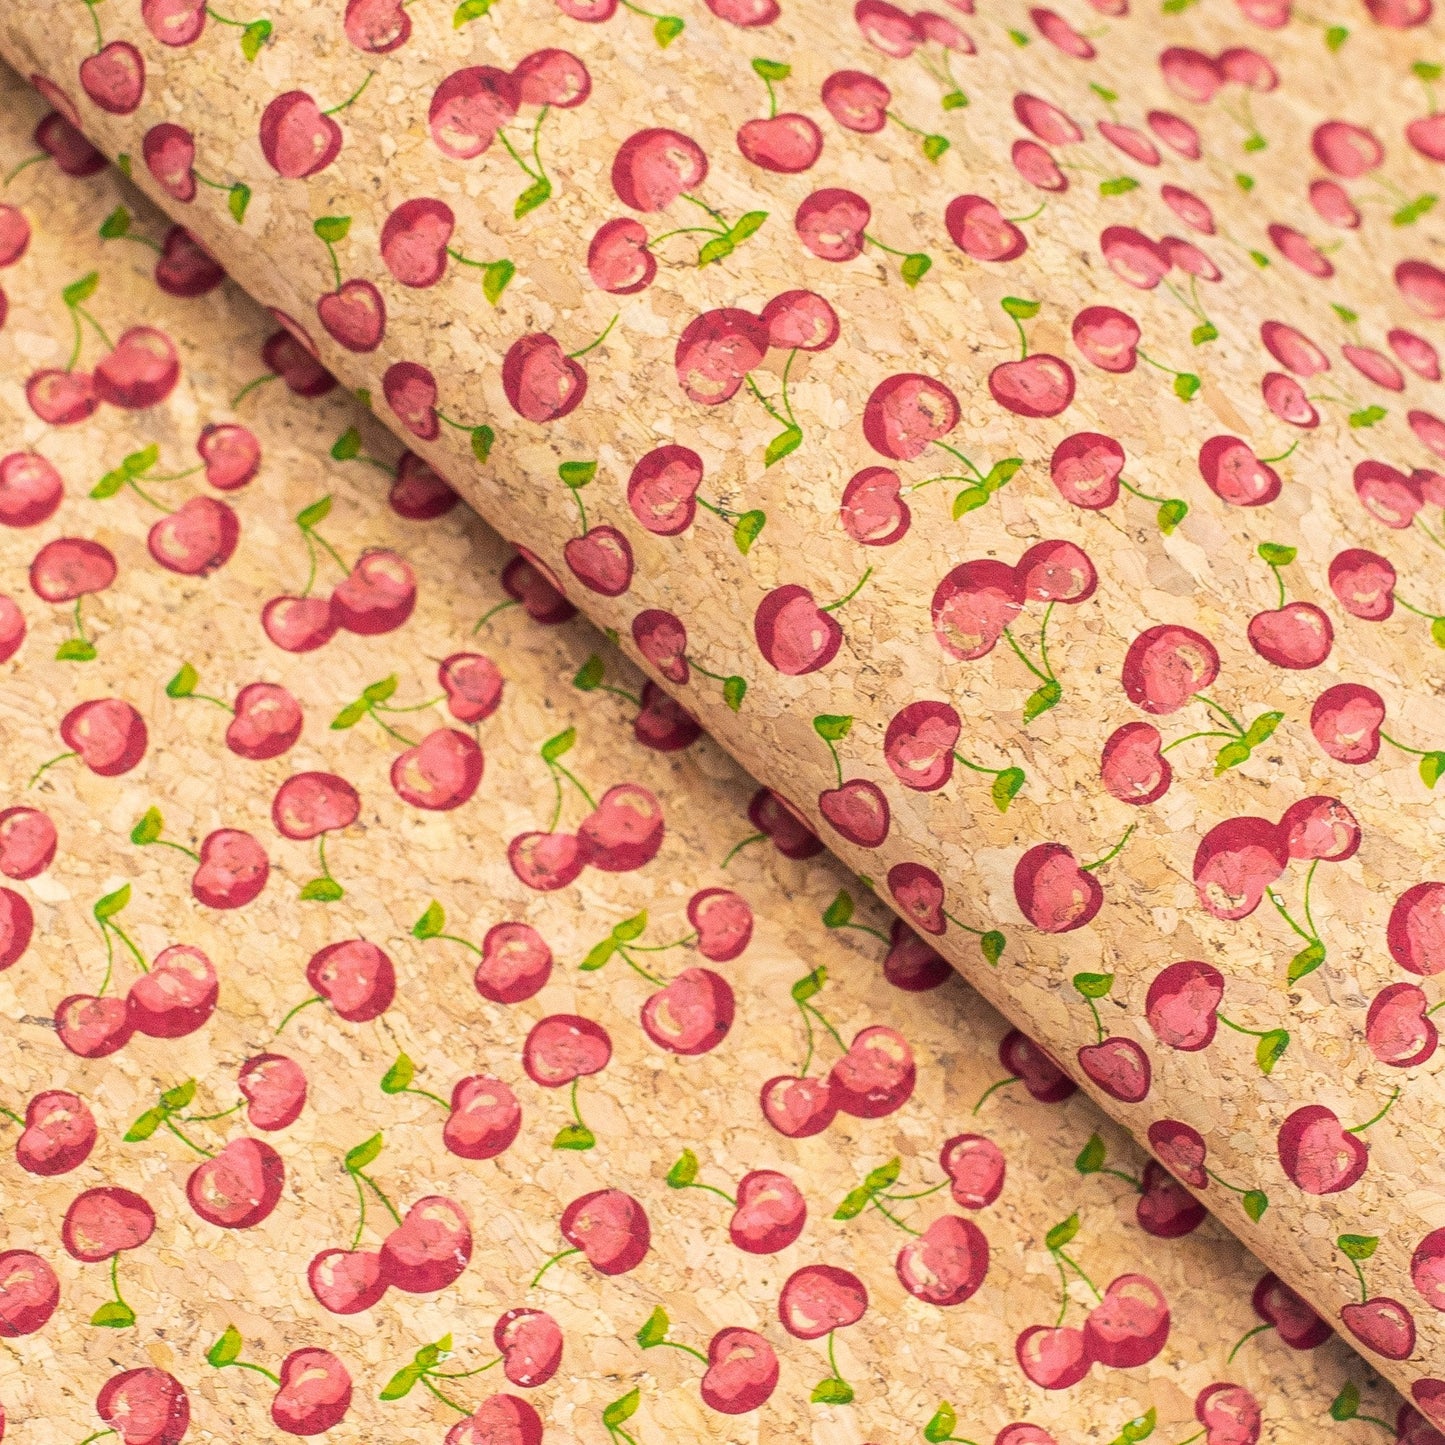 Cherry Blossom Vegan Cork Fabric | THE CORK COLLECTION